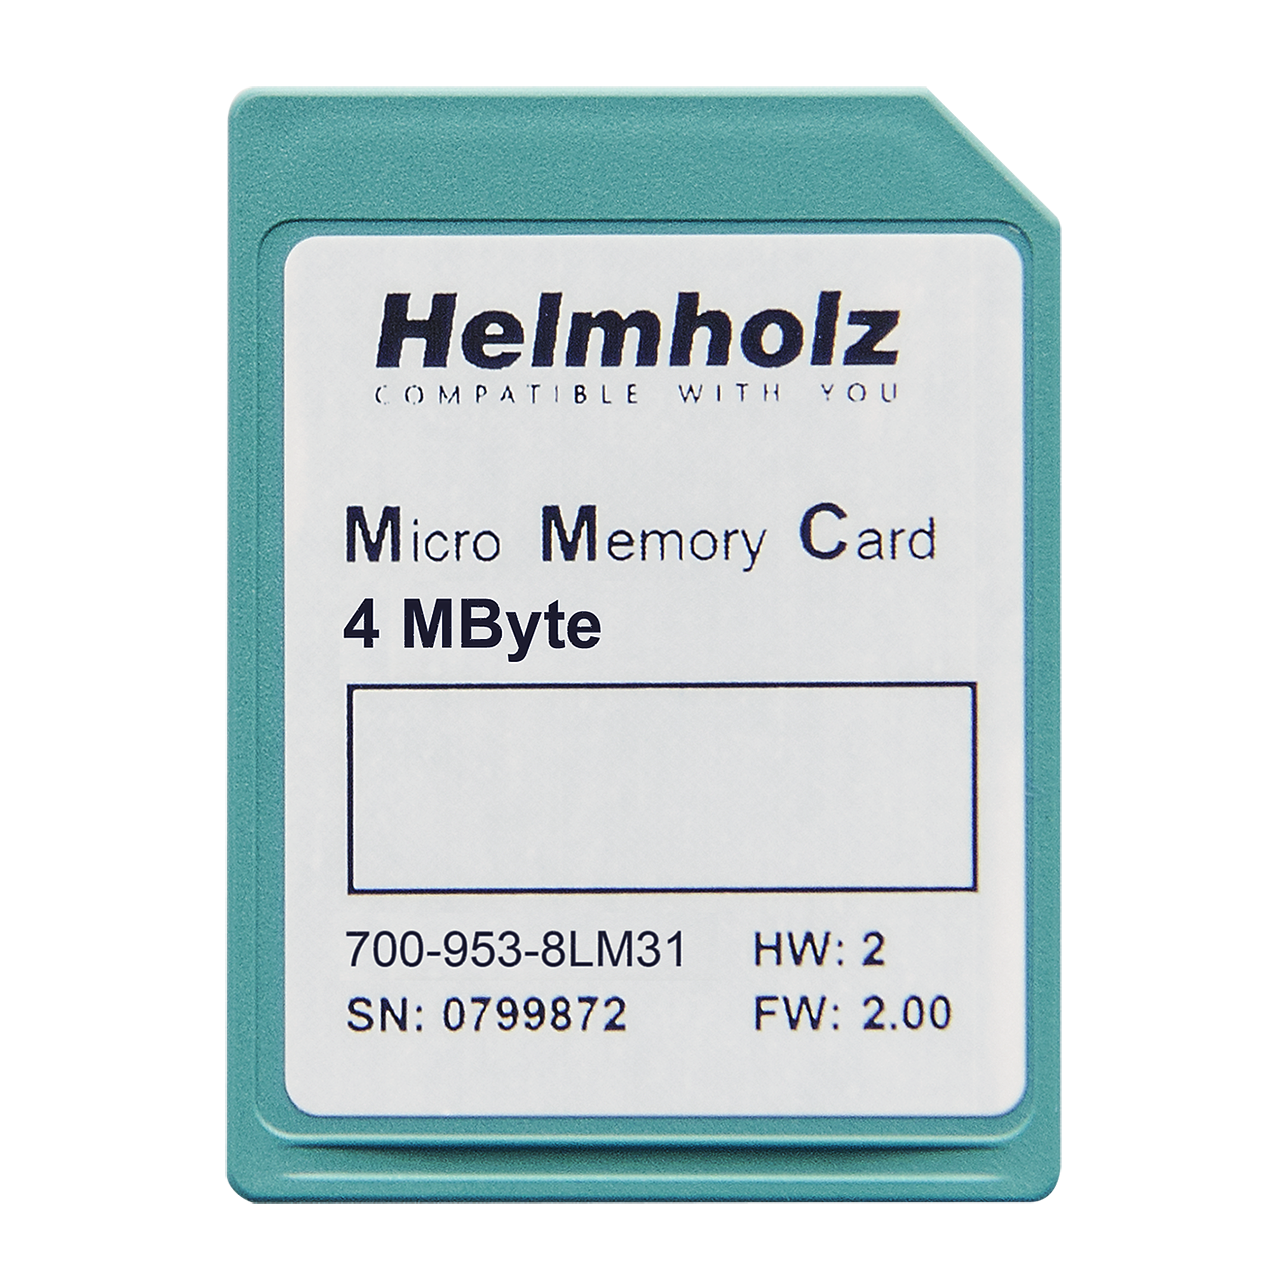 Helmholz Micro Tarjeta de Memoria, 4 MByte 700-953-8LM31